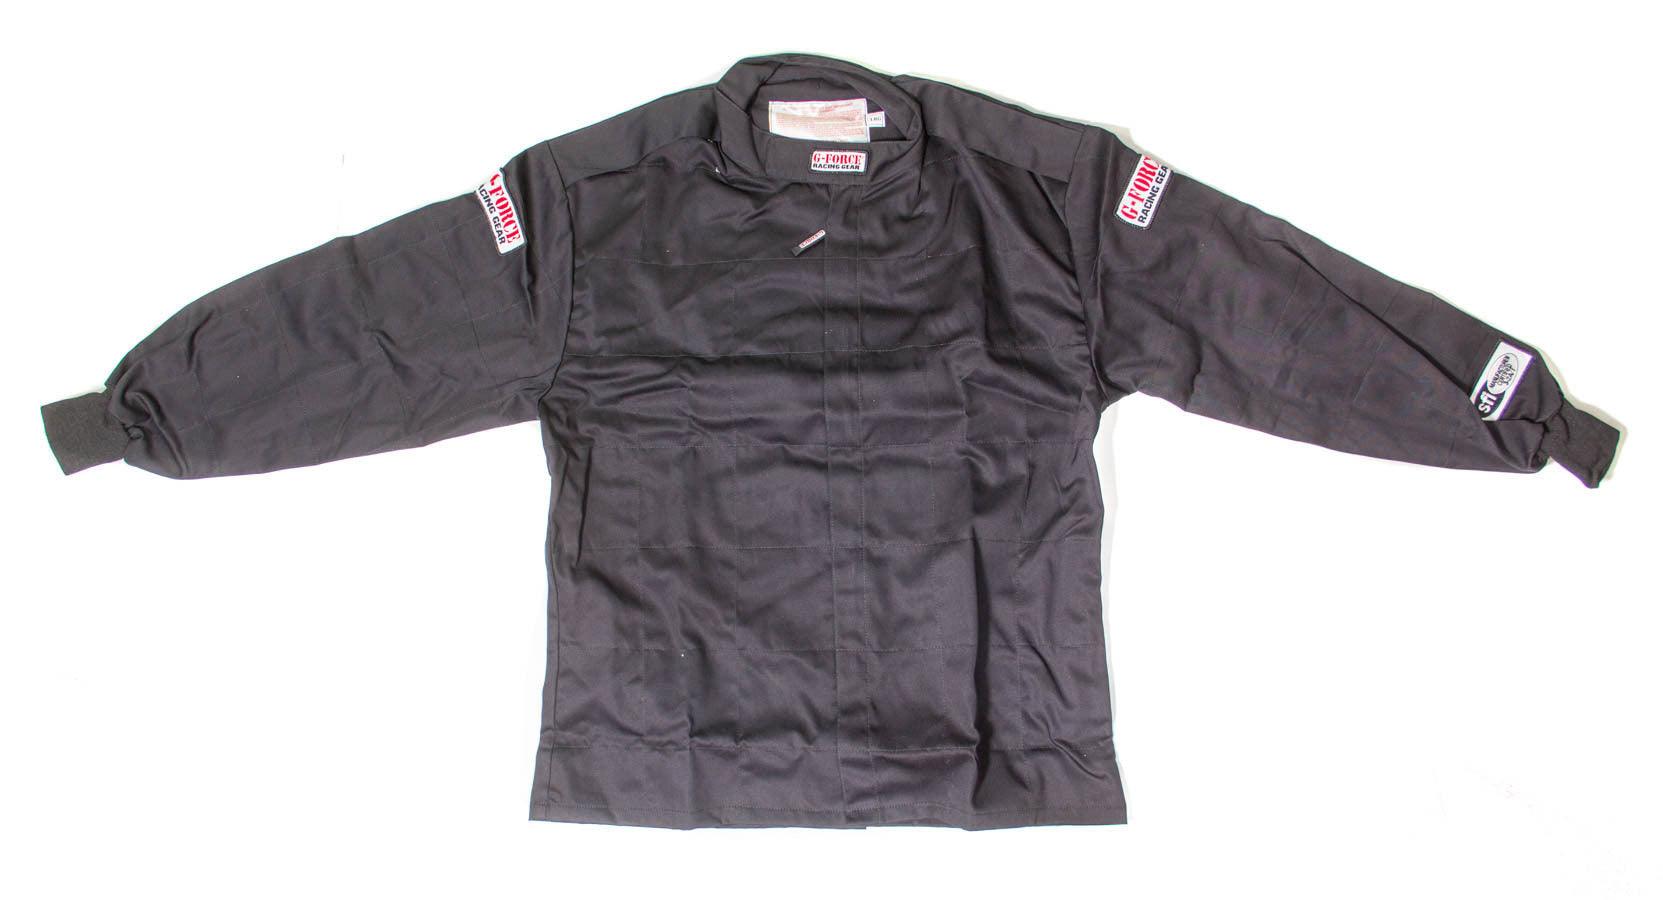 GF125 Jacket Only X-Large Black - Burlile Performance Products